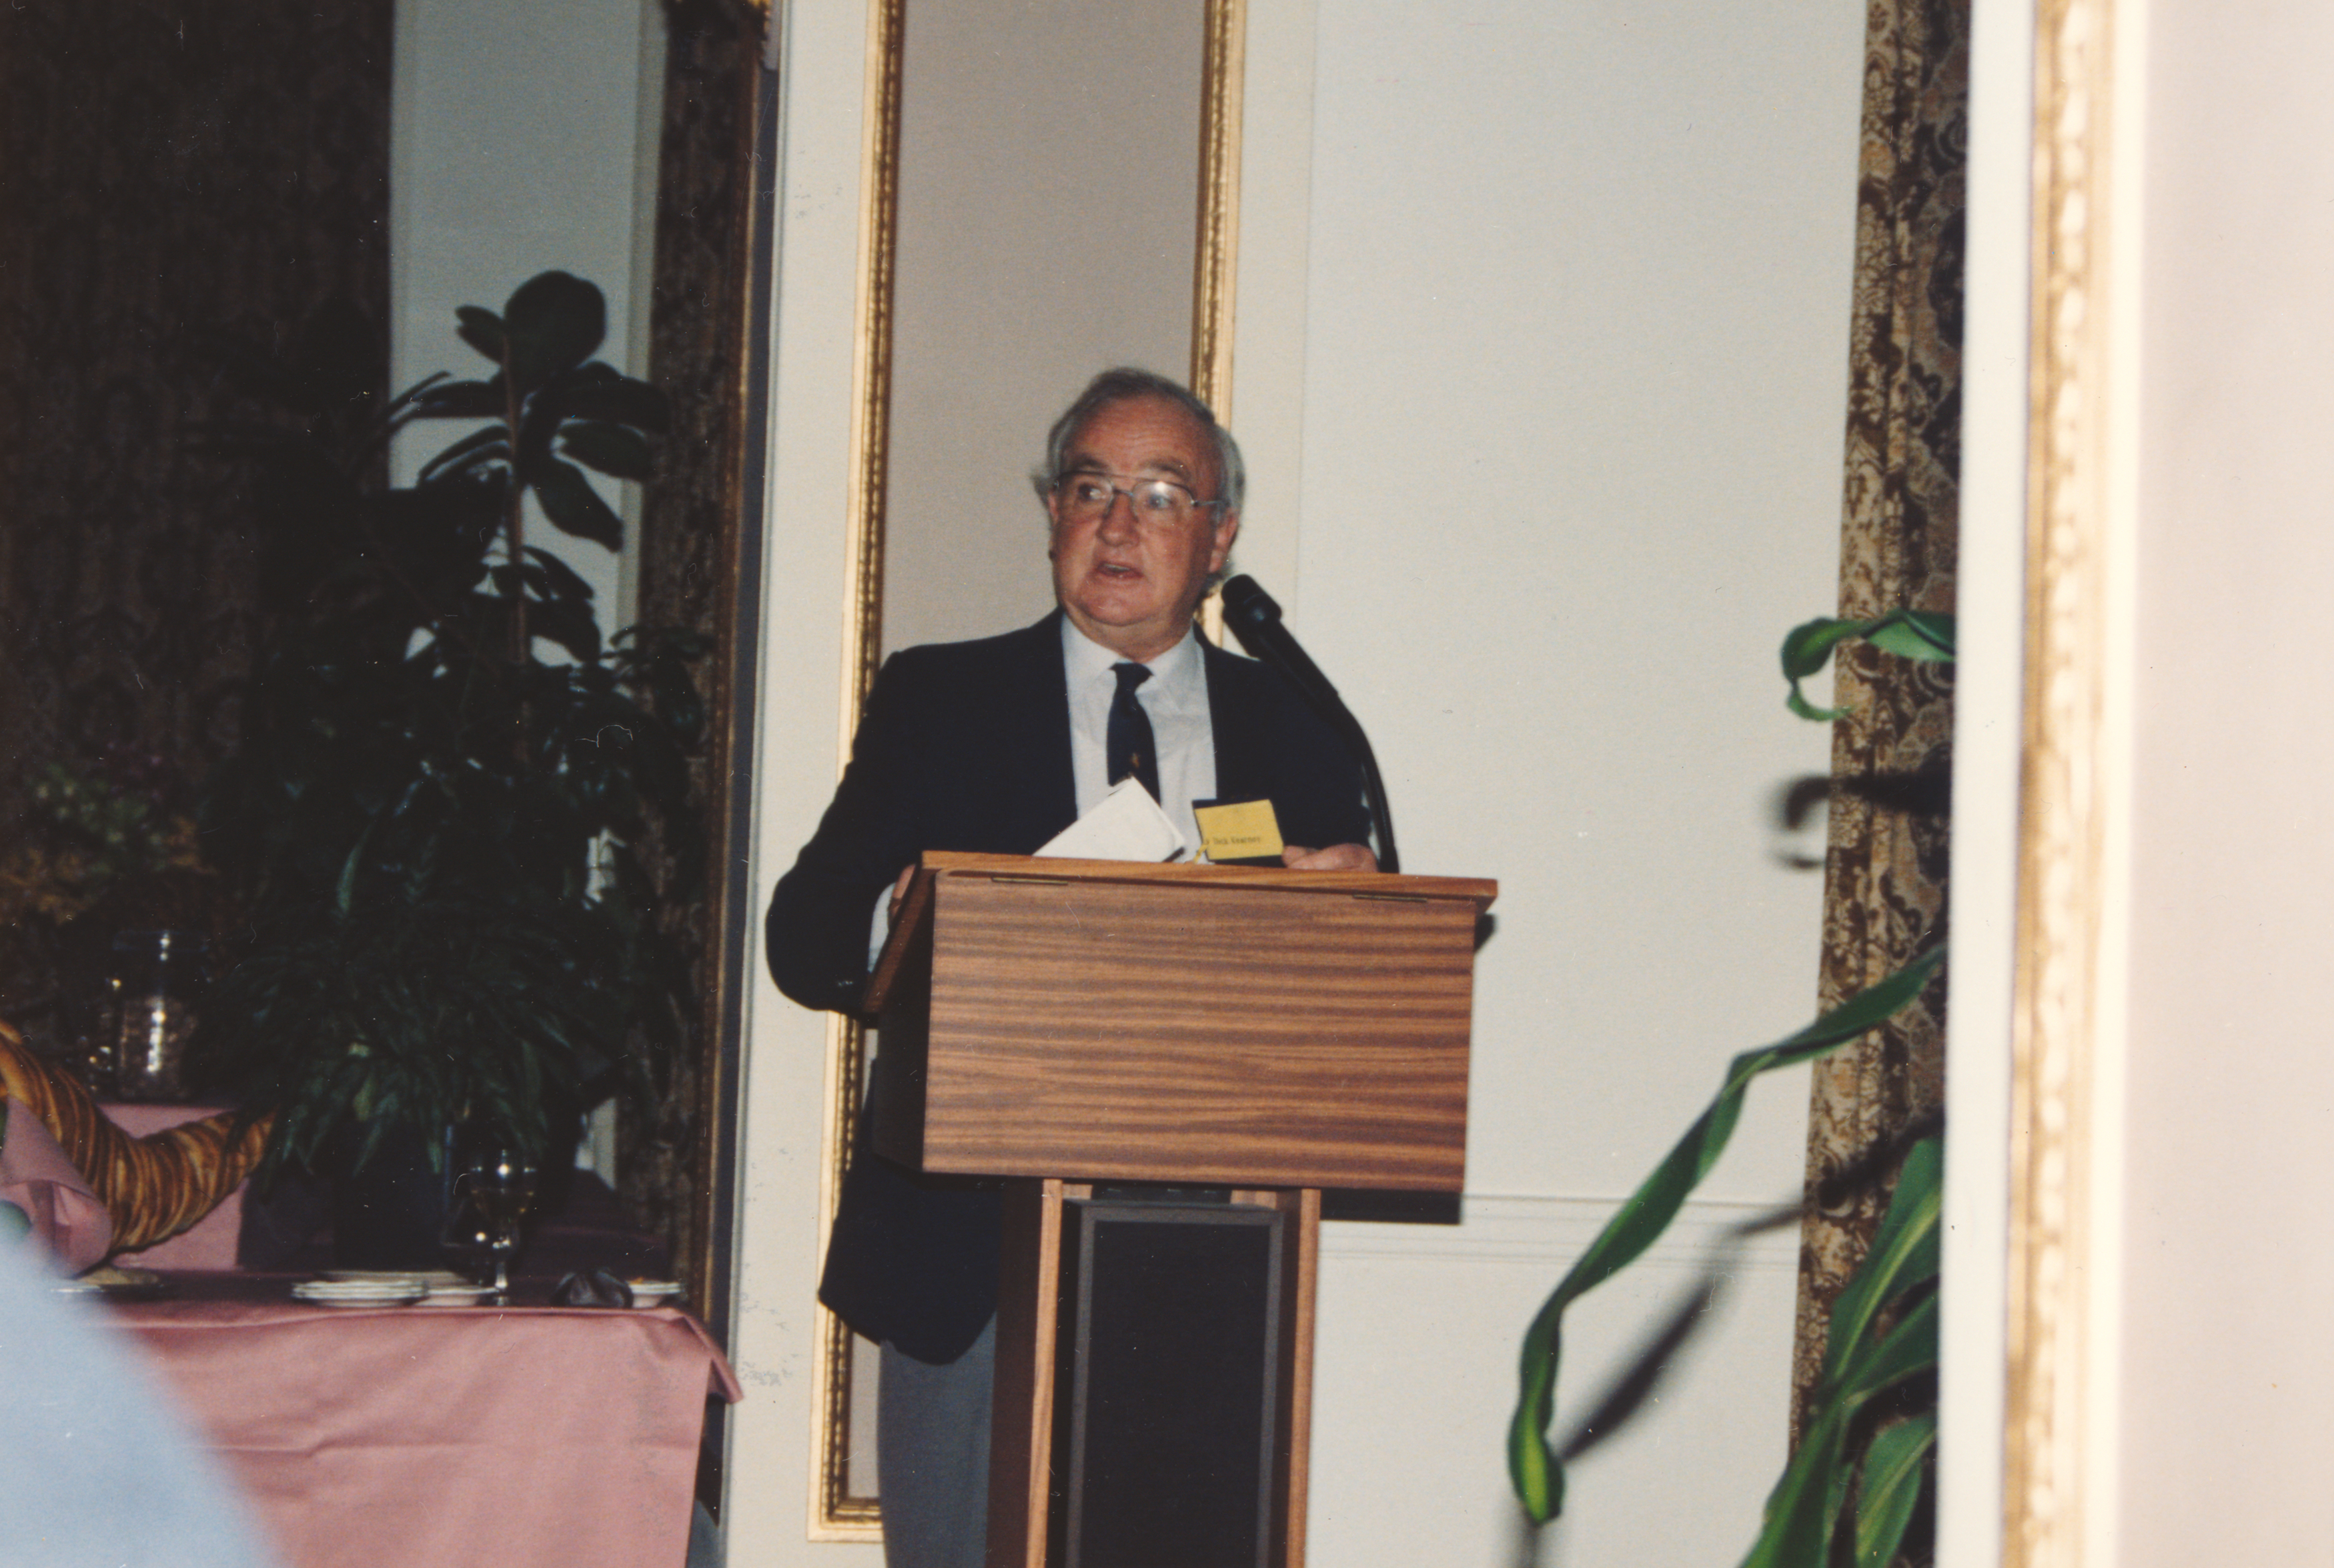 Photo of Judge Richard Kearney